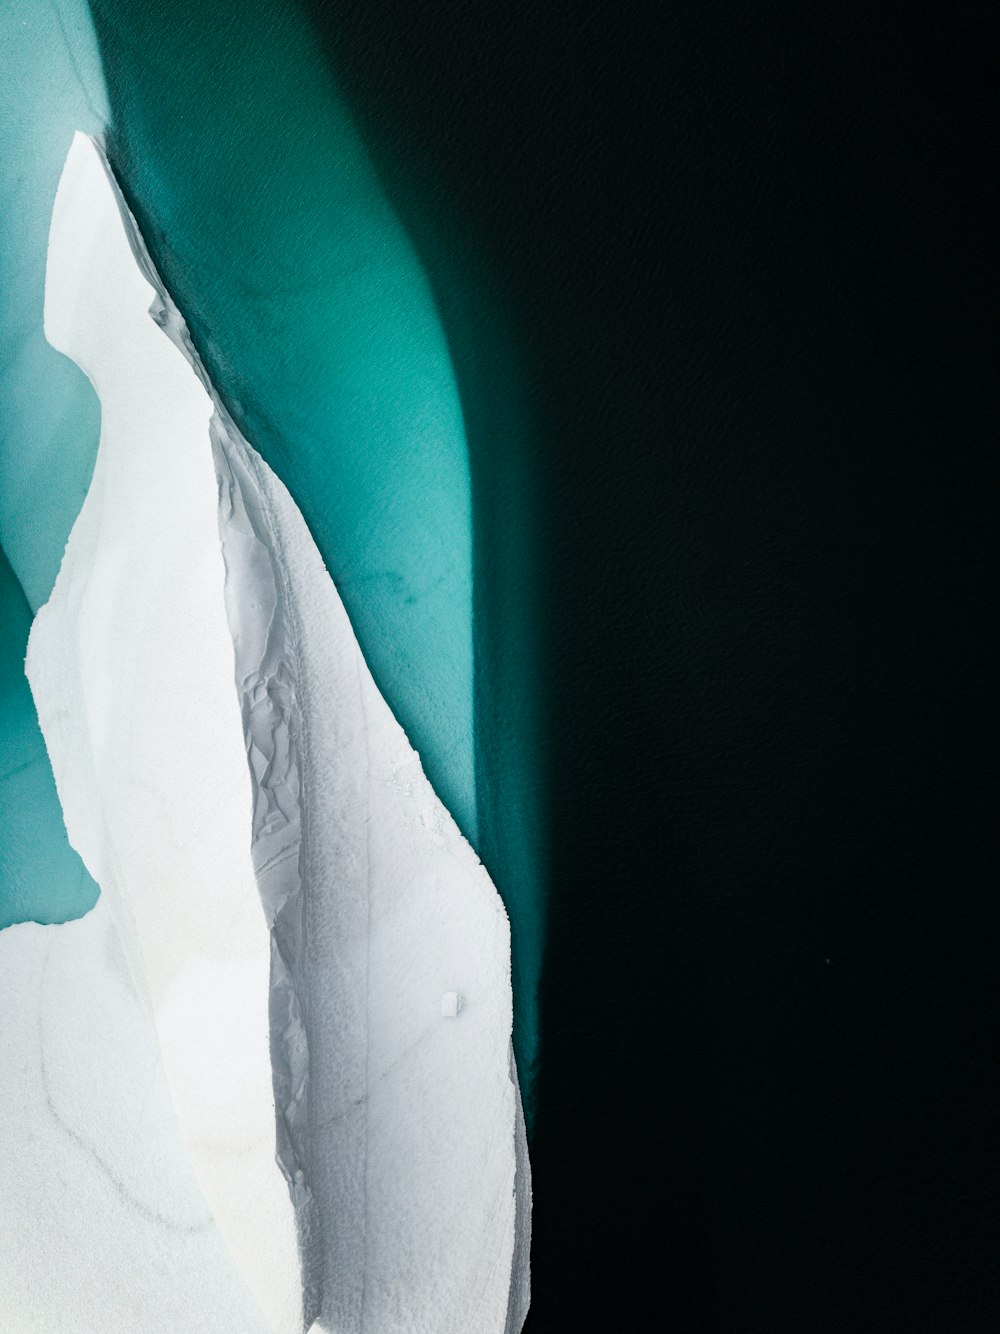 Una veduta aerea di un ghiacciaio nella neve